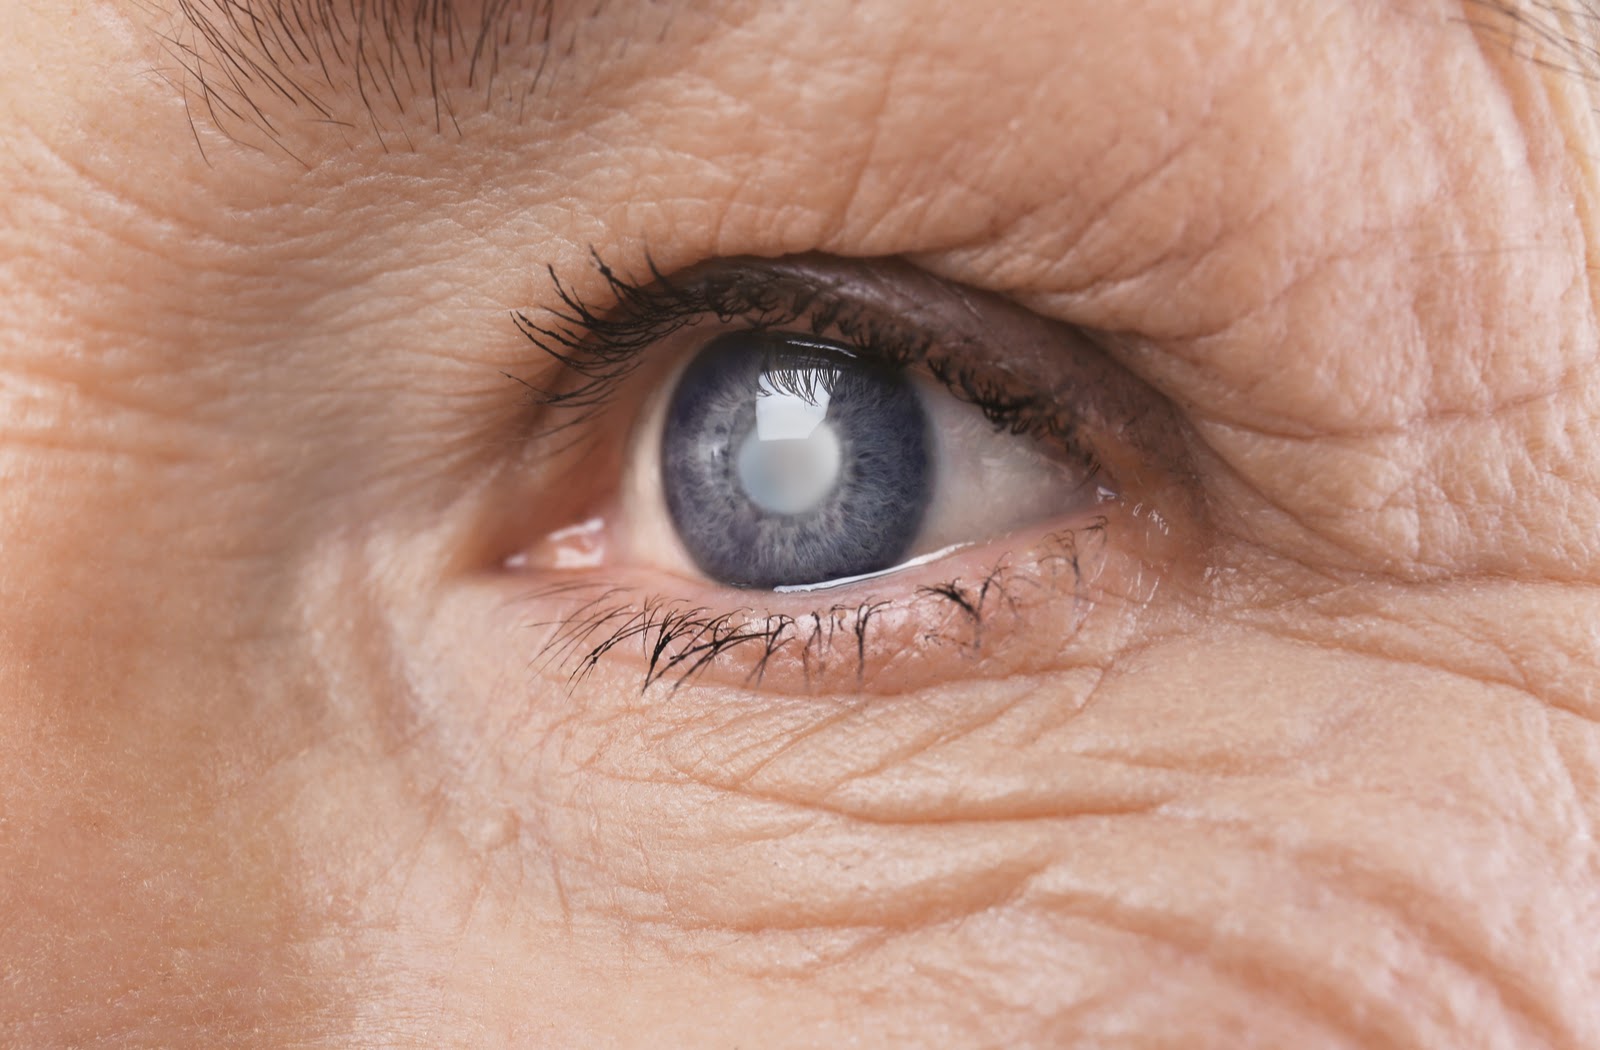 Glaucoma - High Internal Eye Pressure That Causes Vision Loss